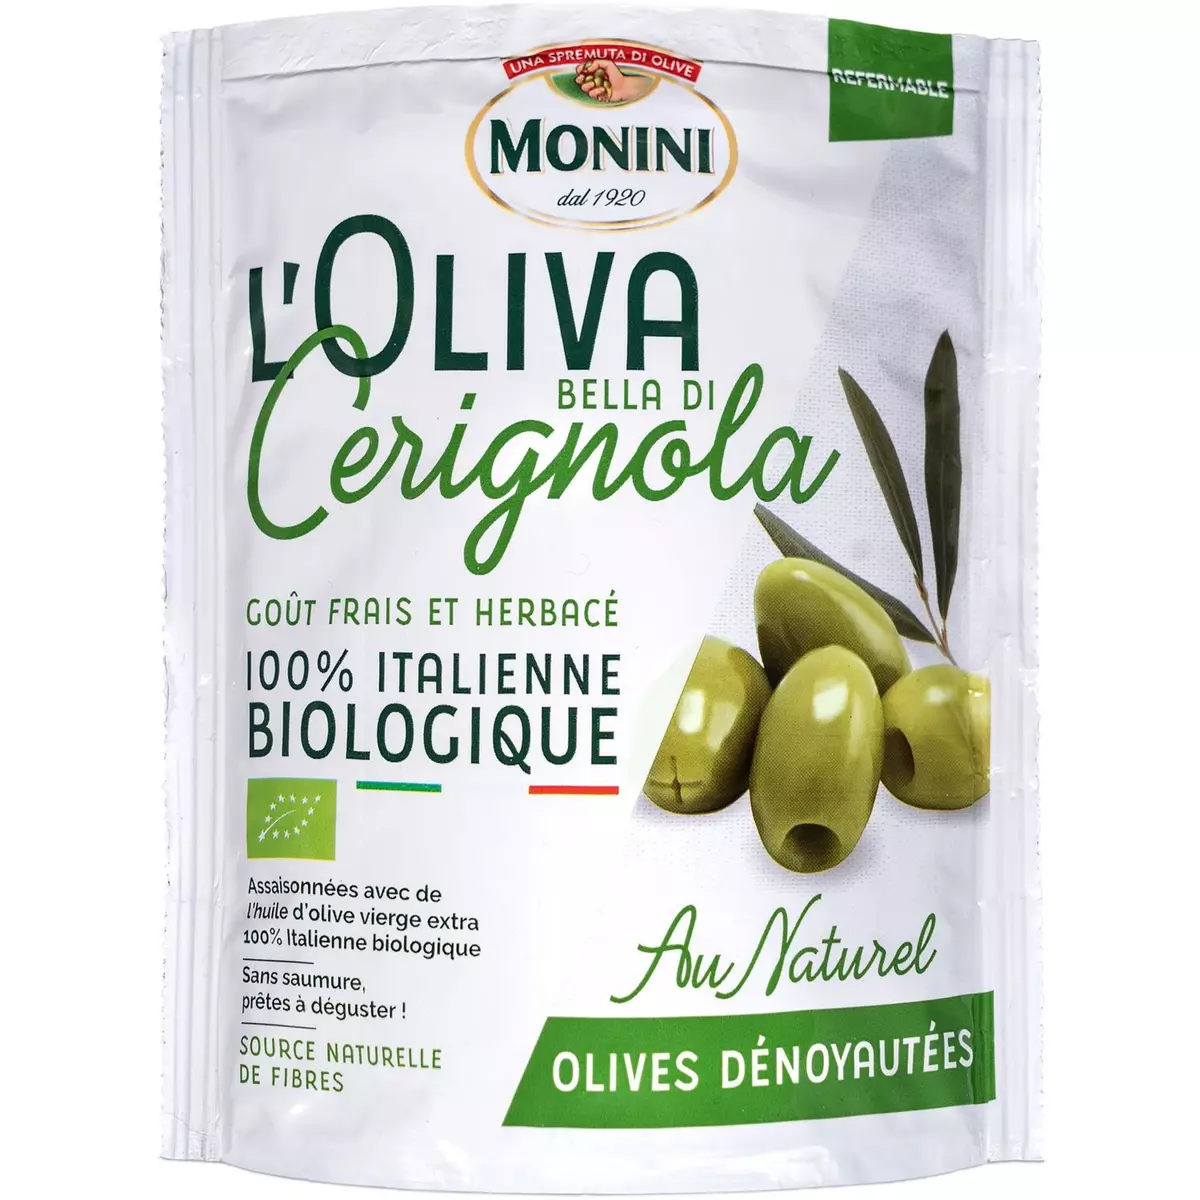 MONINI Olives vertes bio dénoyautées Cerignola  150g